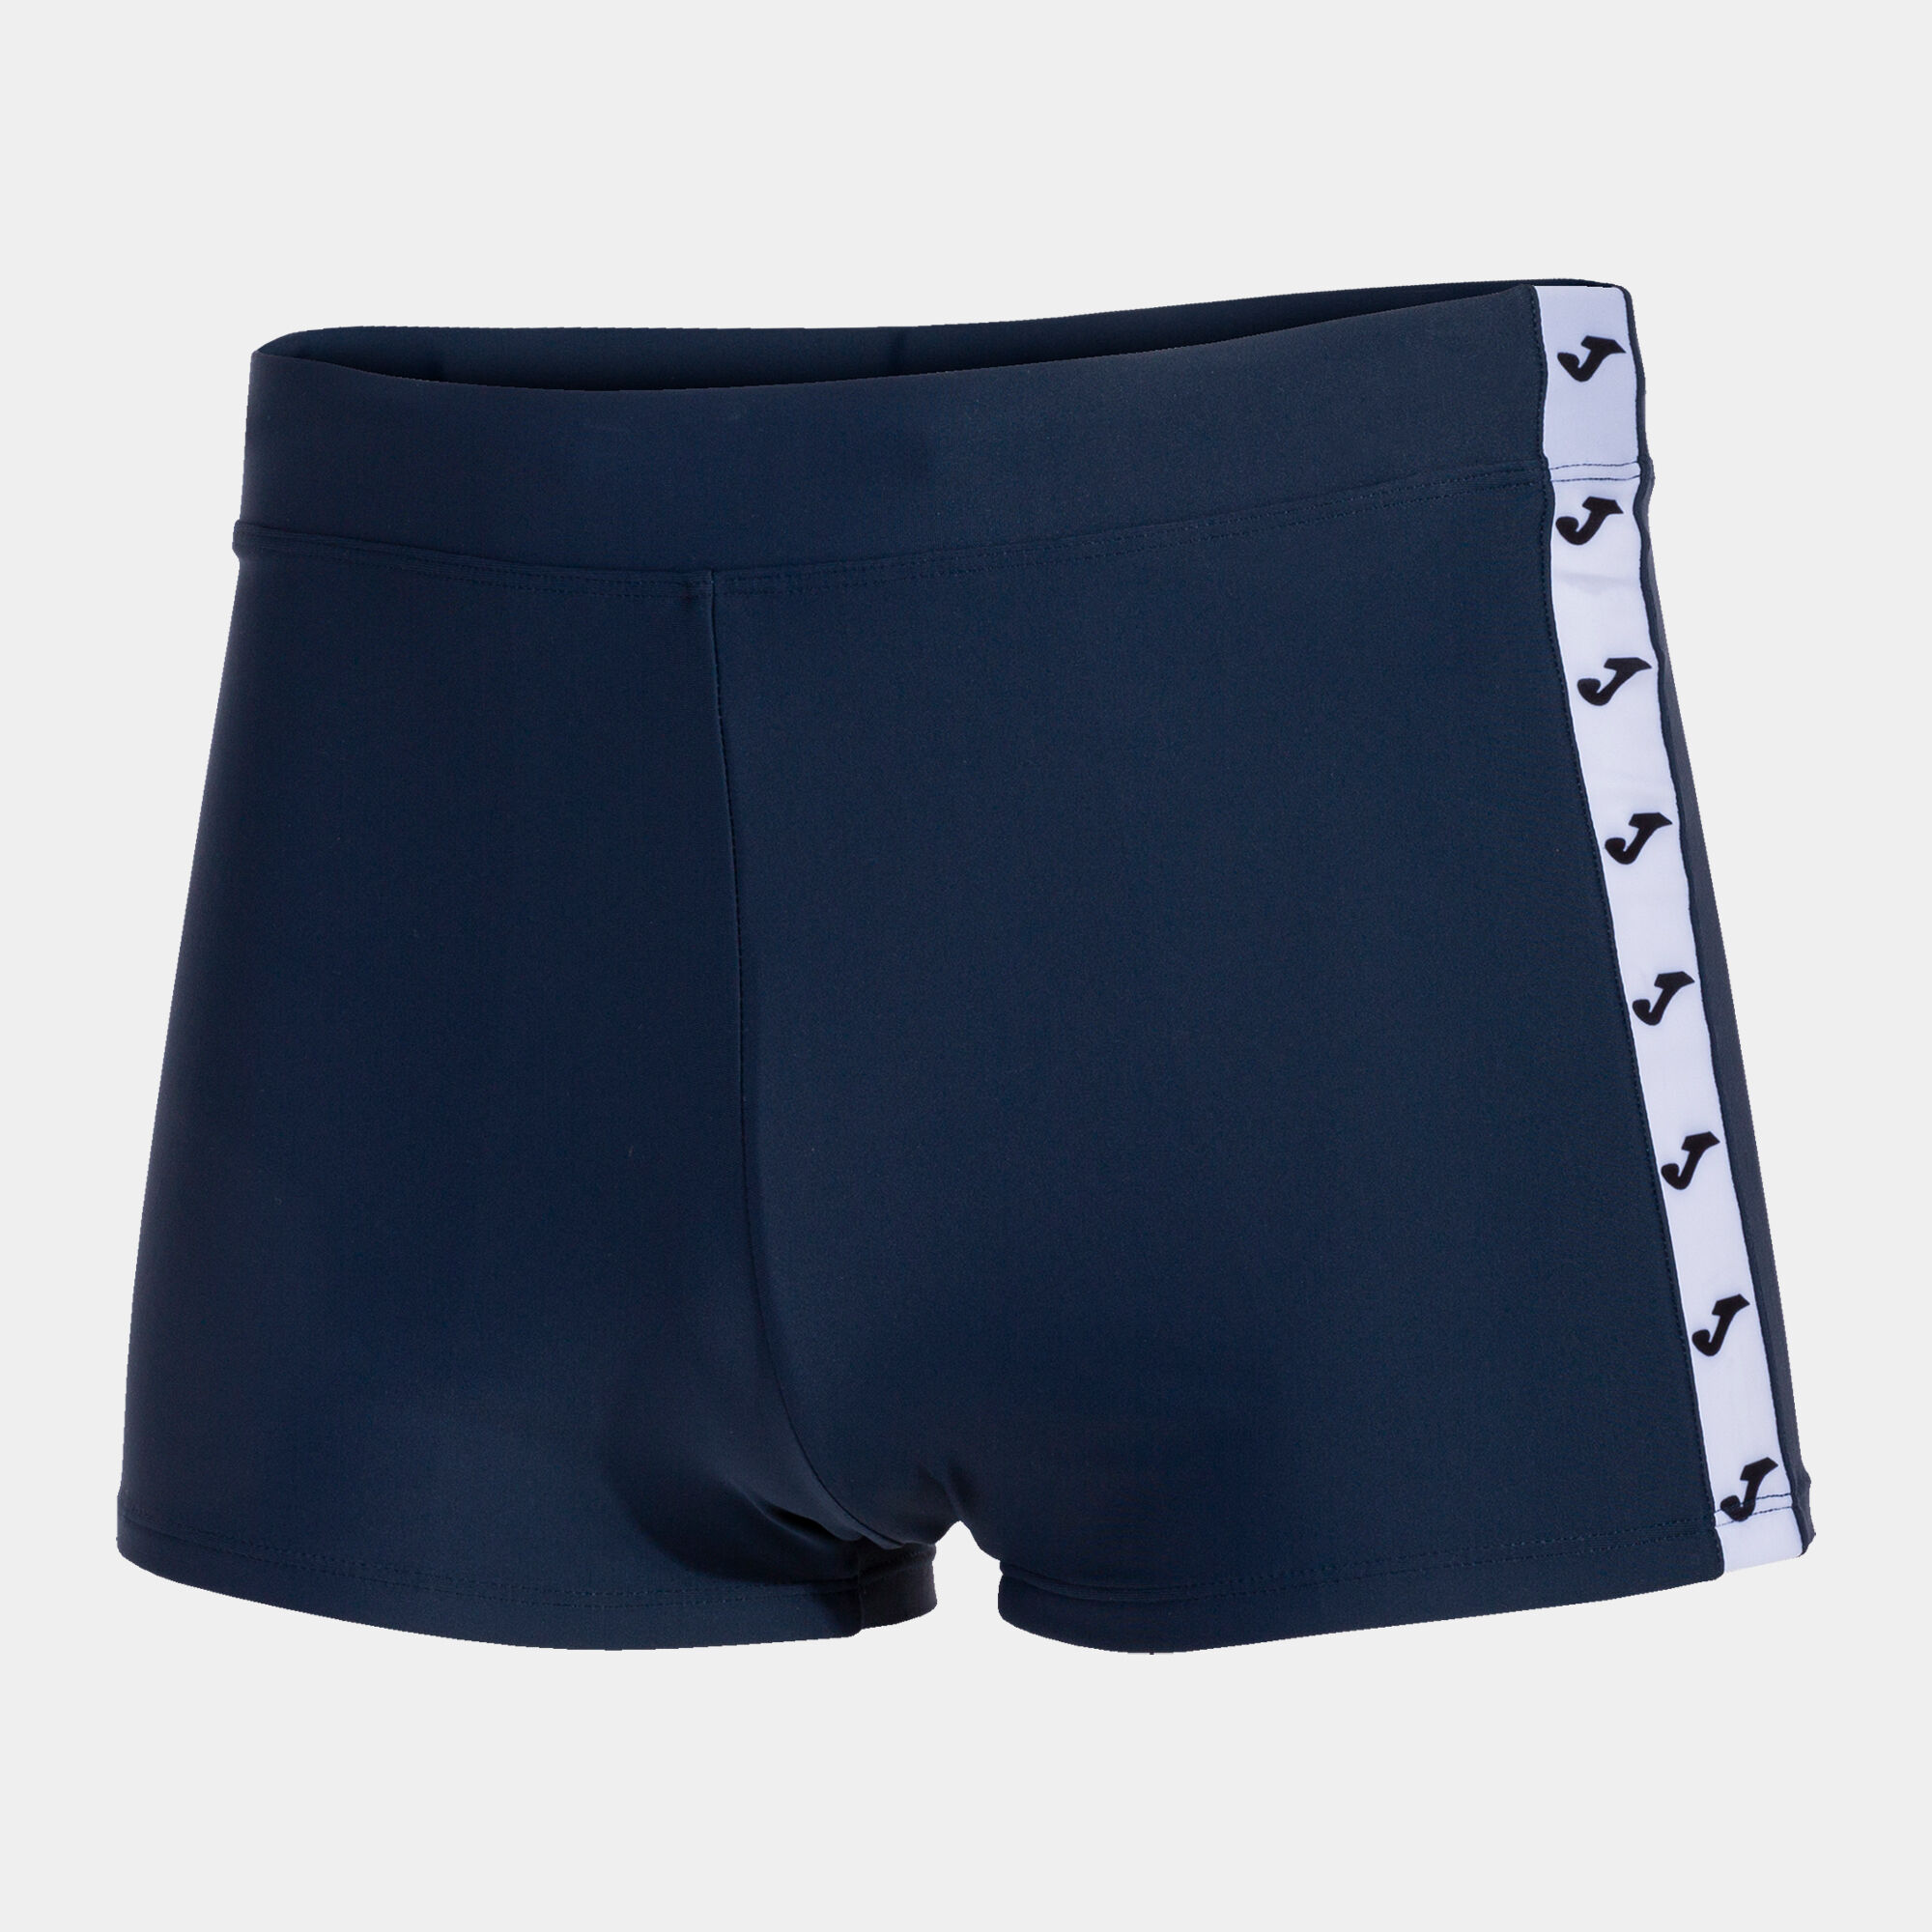 Swimming shorts man Splash navy blue